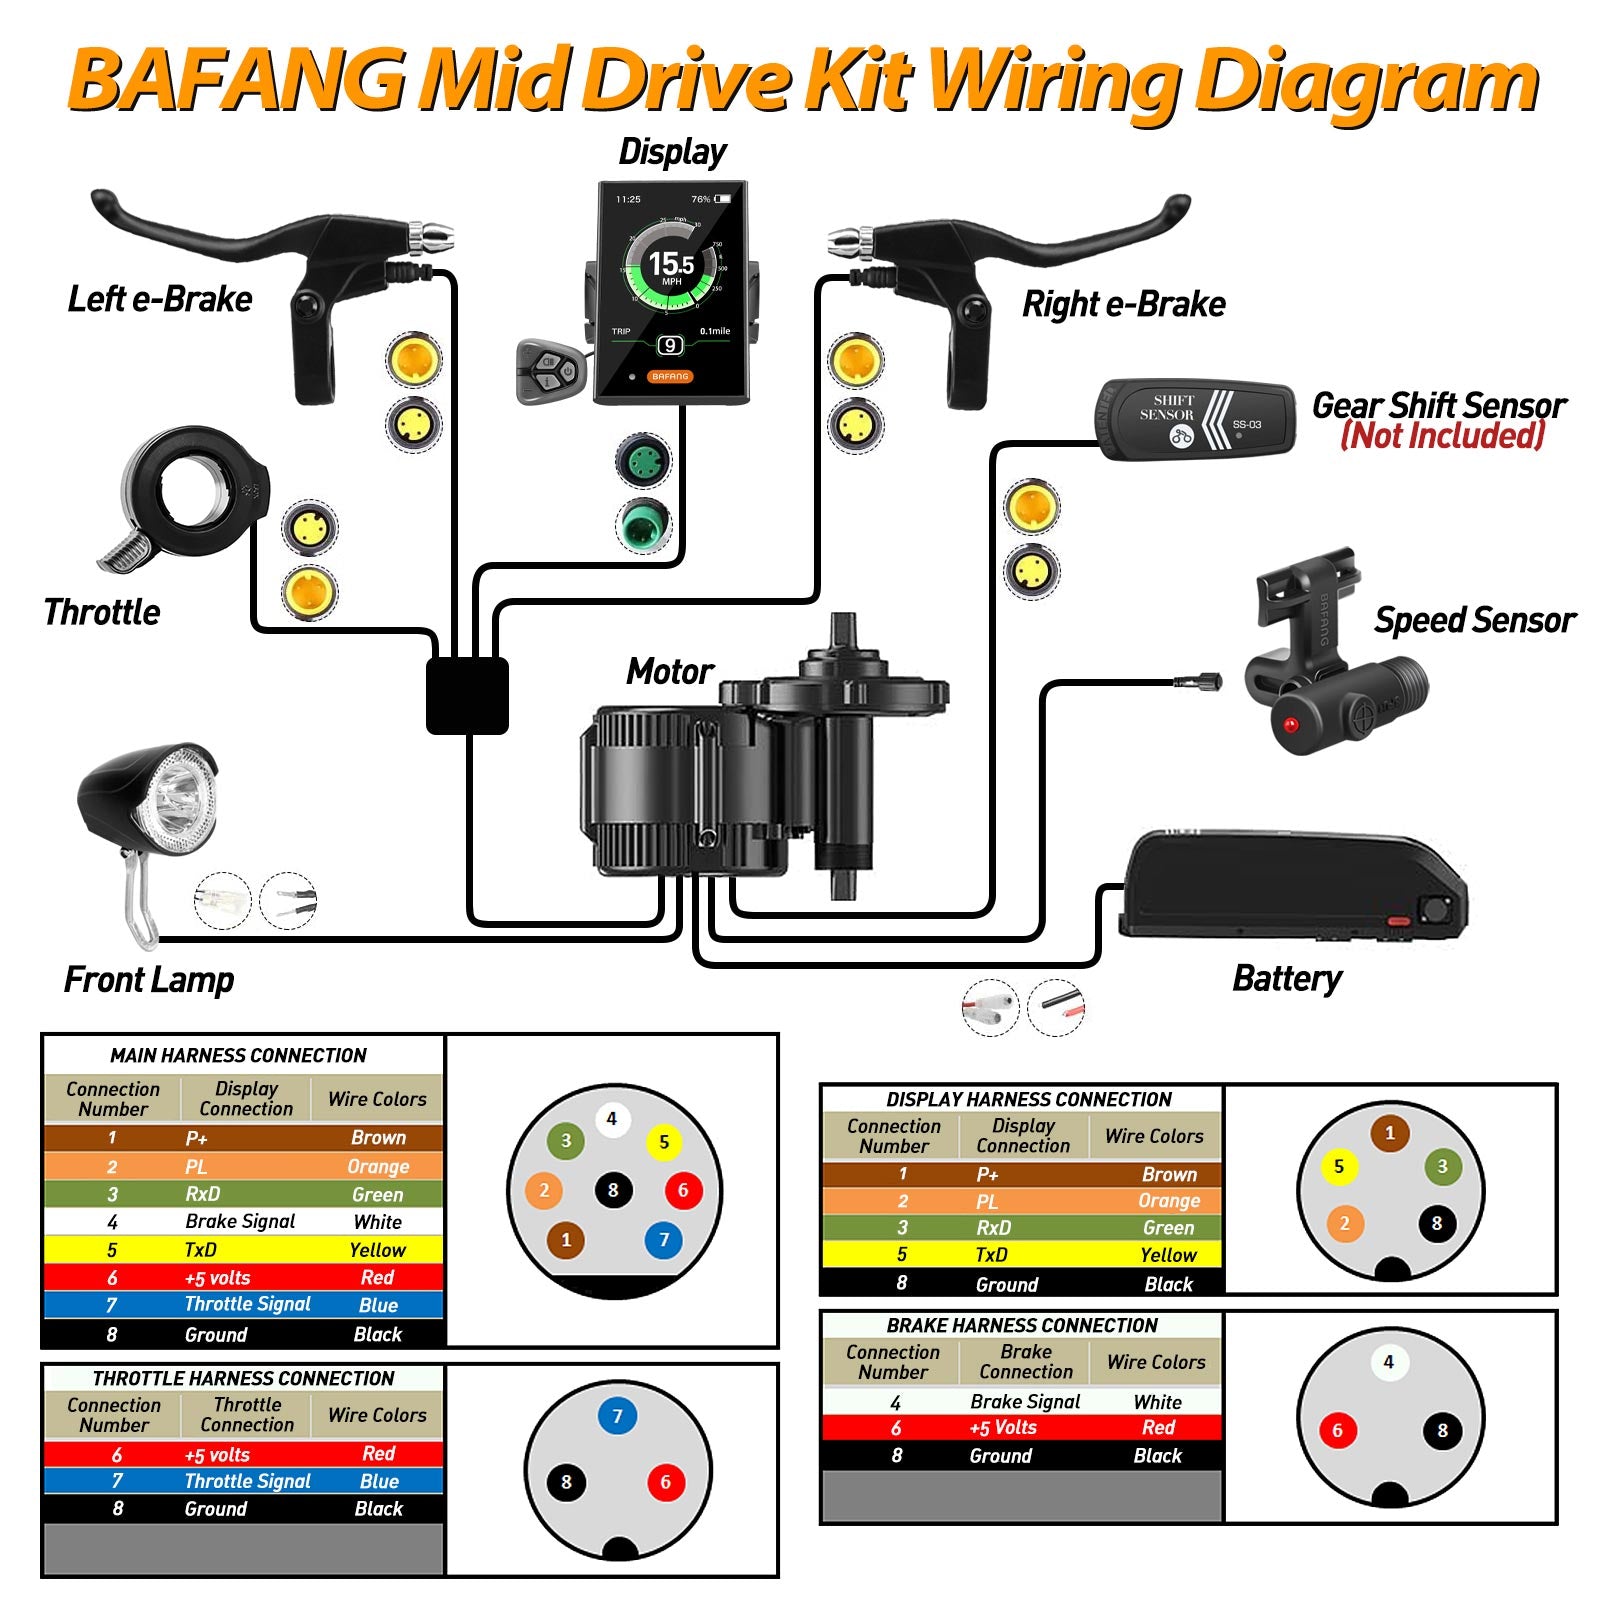 BAFANG - BBS01B, BBS02B, BBSHD, Mid Drive Conversion Kit with DPC-18, Battery Optional